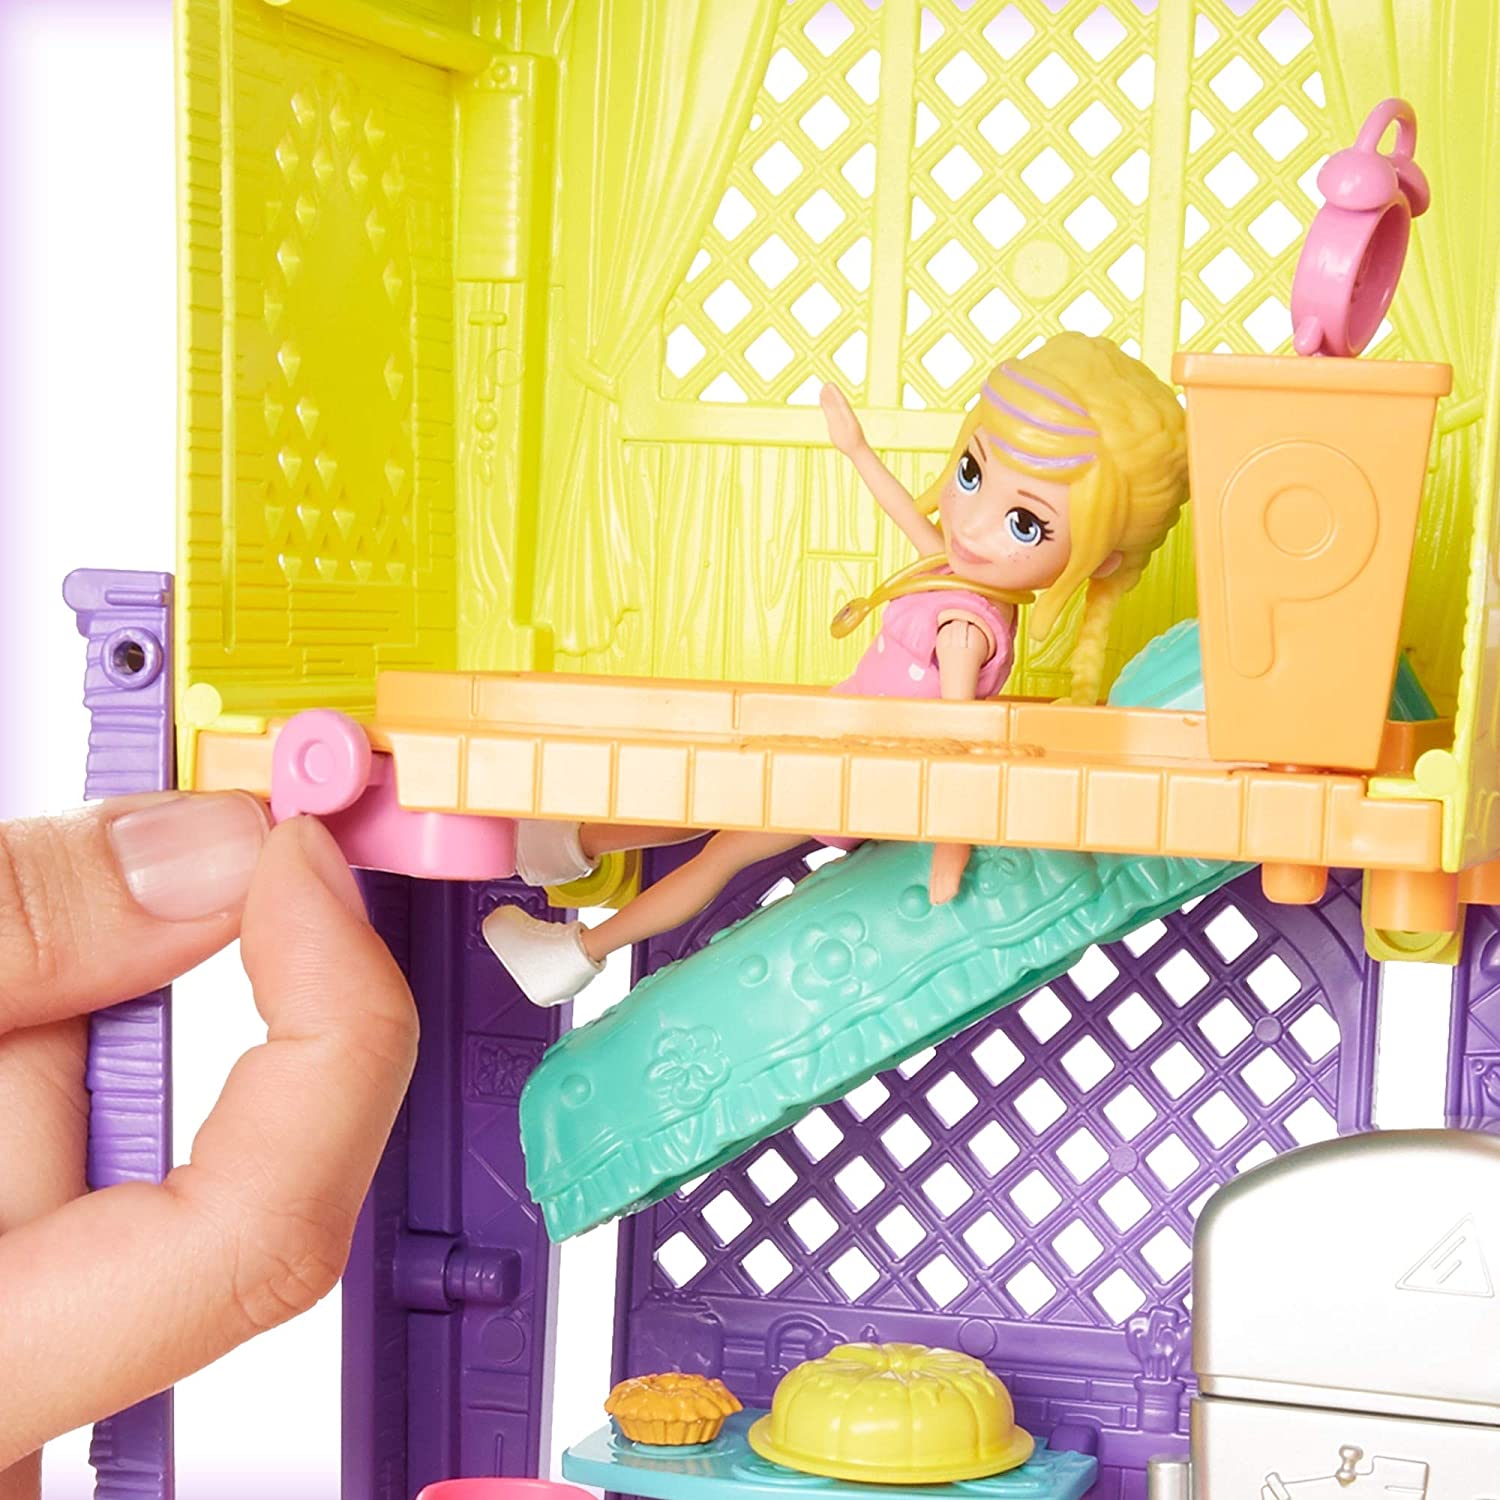 Playset Polly Pocket Club House da Polly GMF81 - Mattel - Happily Brinquedos